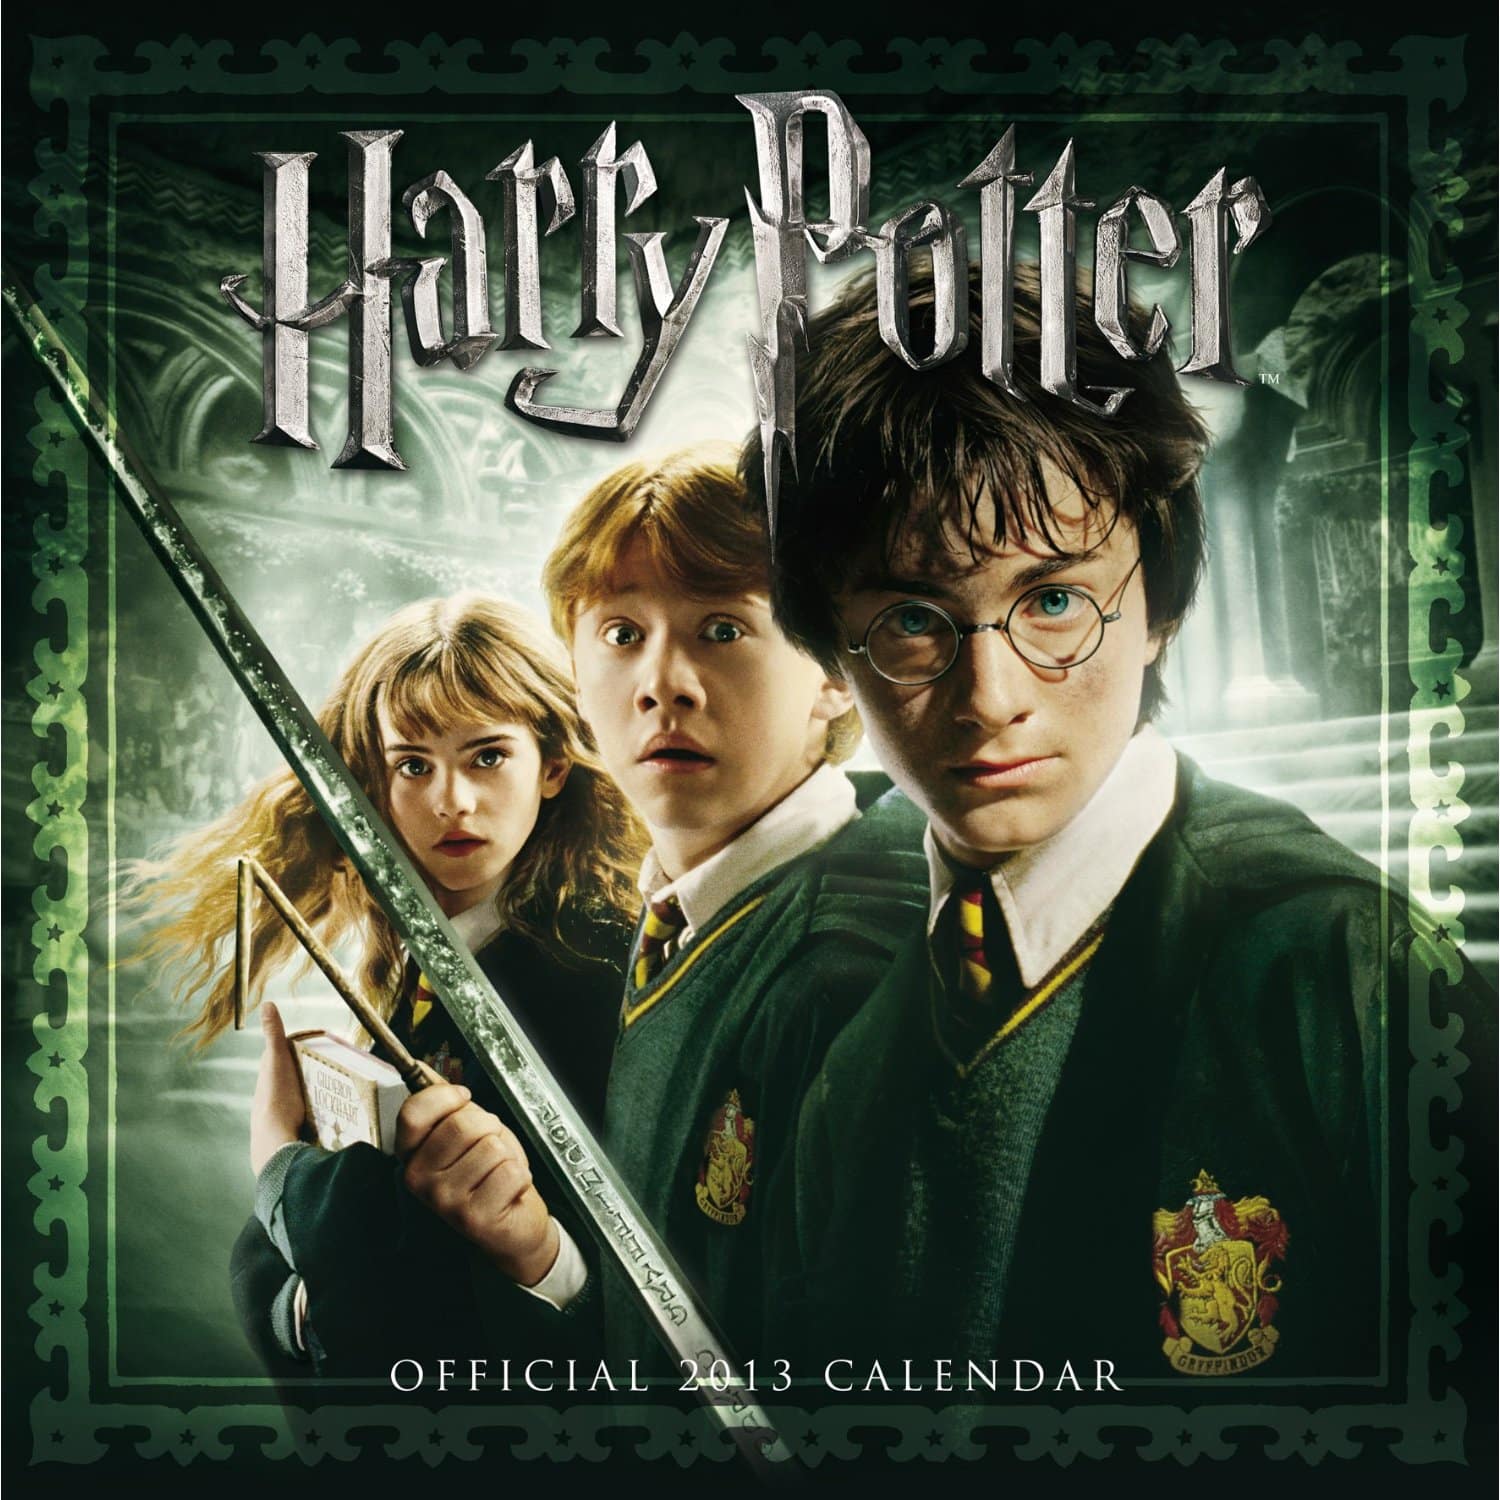 Harry Potter Movie Memorabilia: Harry Potter Official 2013 Calendar